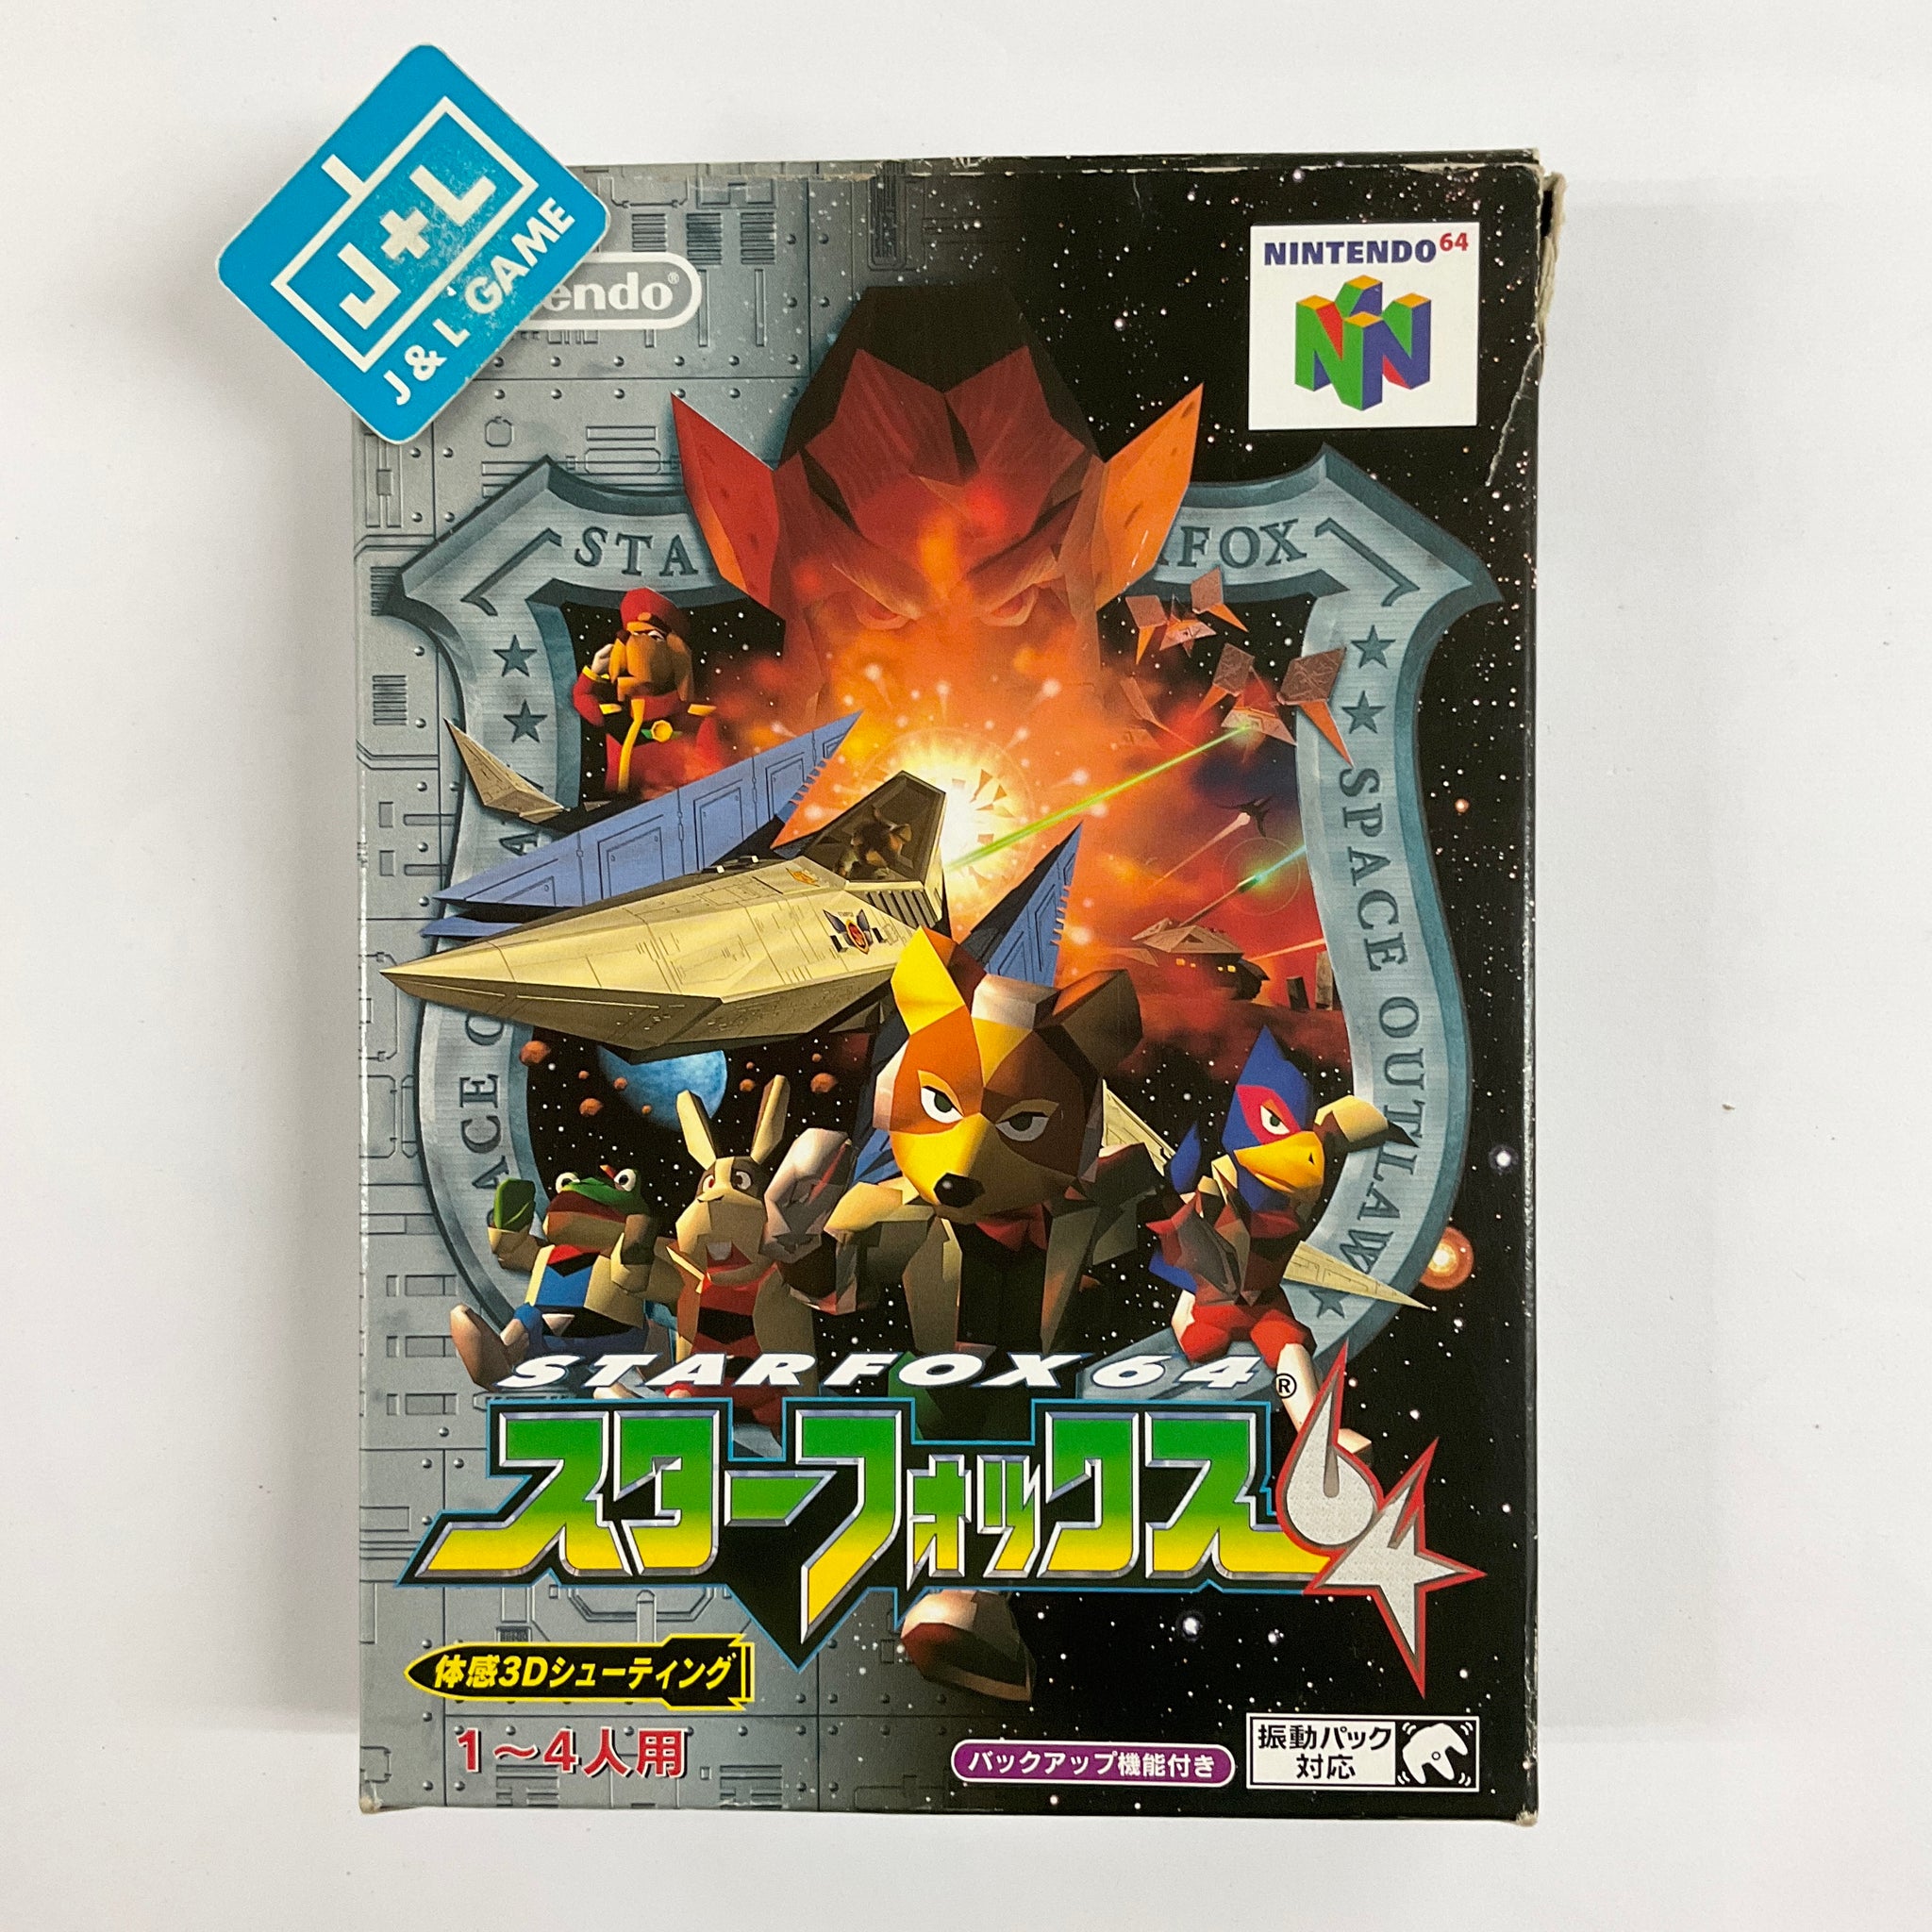 Star Fox 64 Nintendo 64 Video Game N64